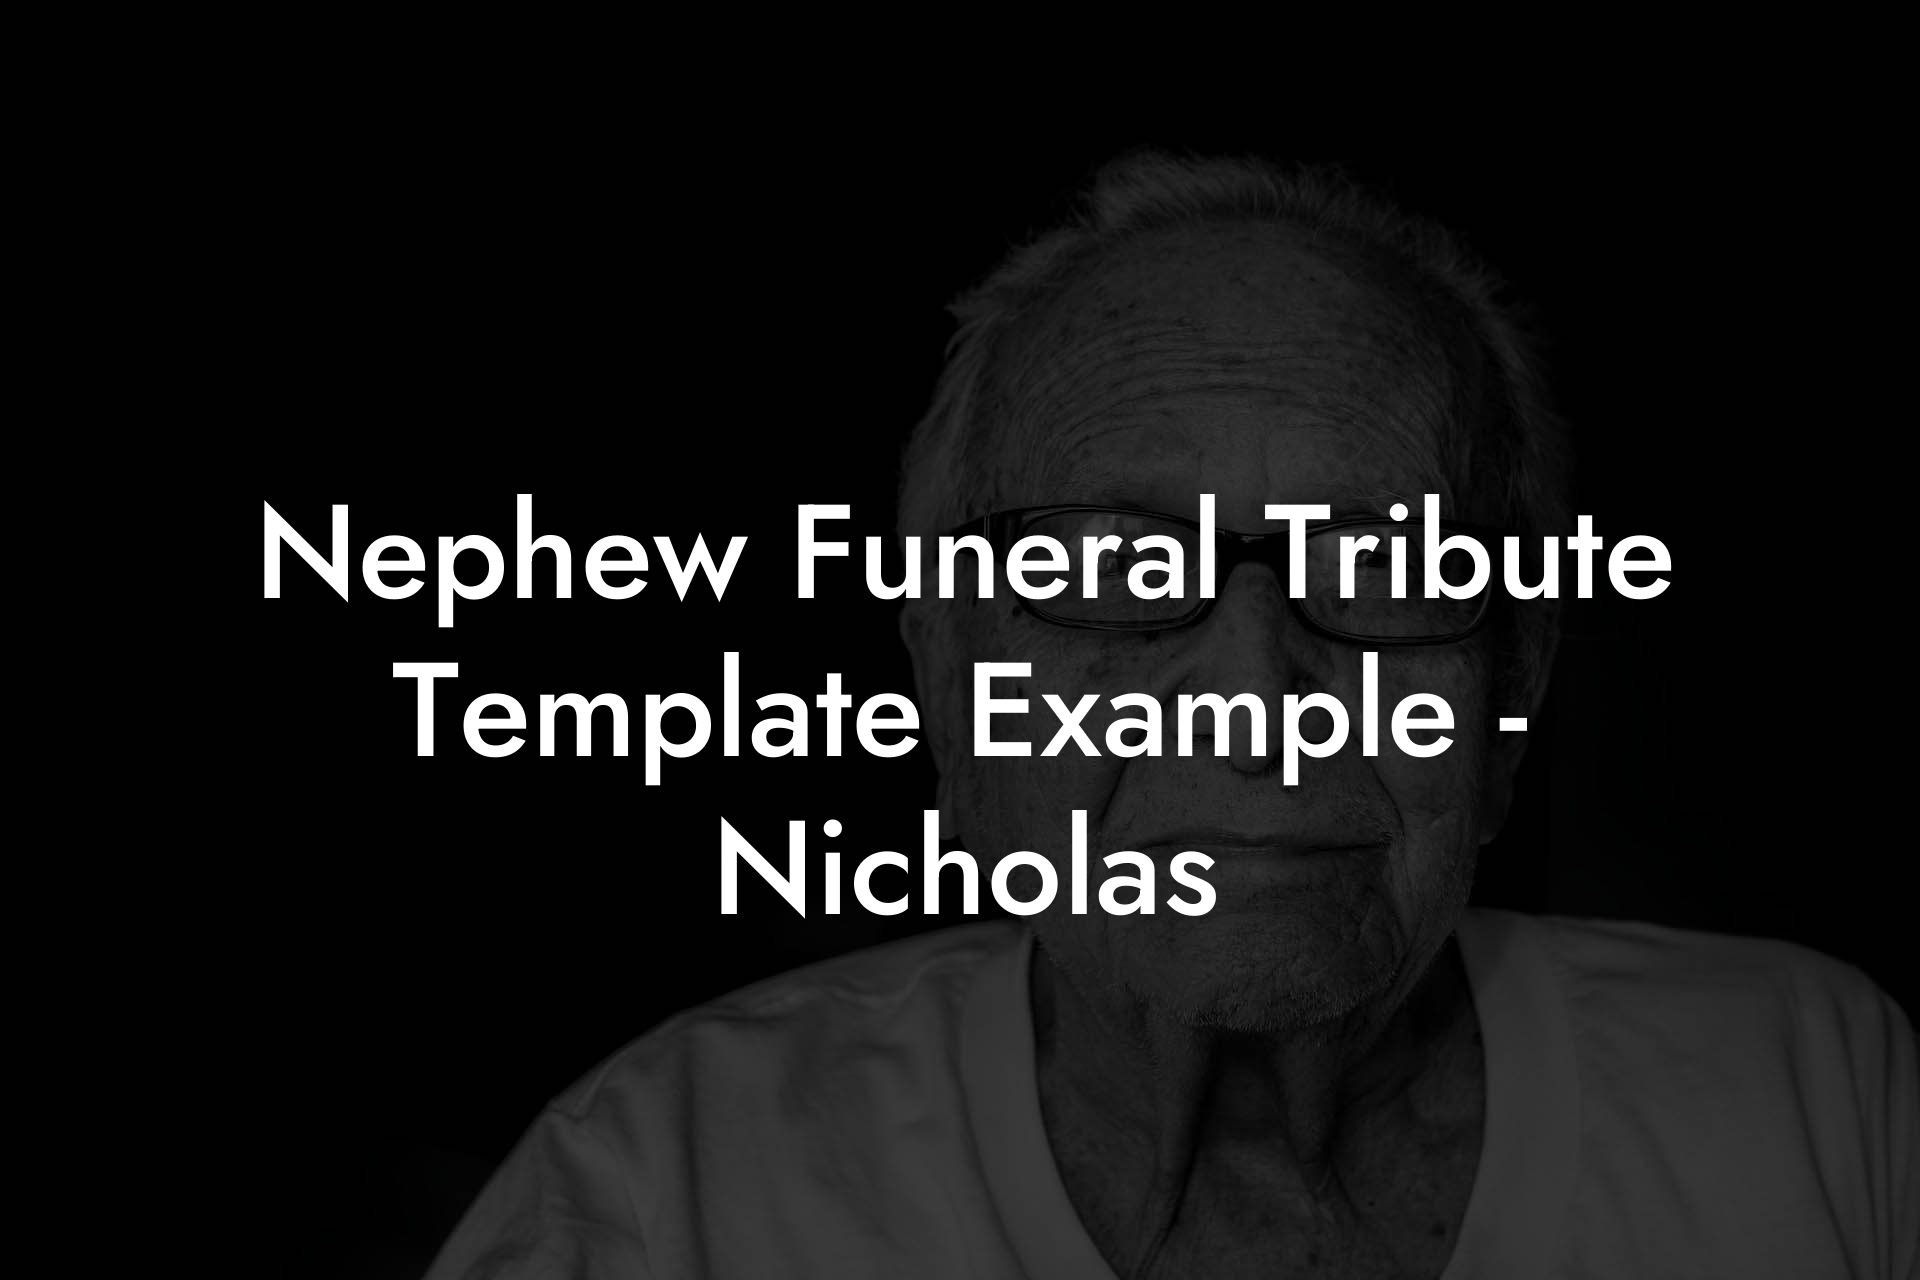 Nephew Funeral Tribute Template Example - Nicholas